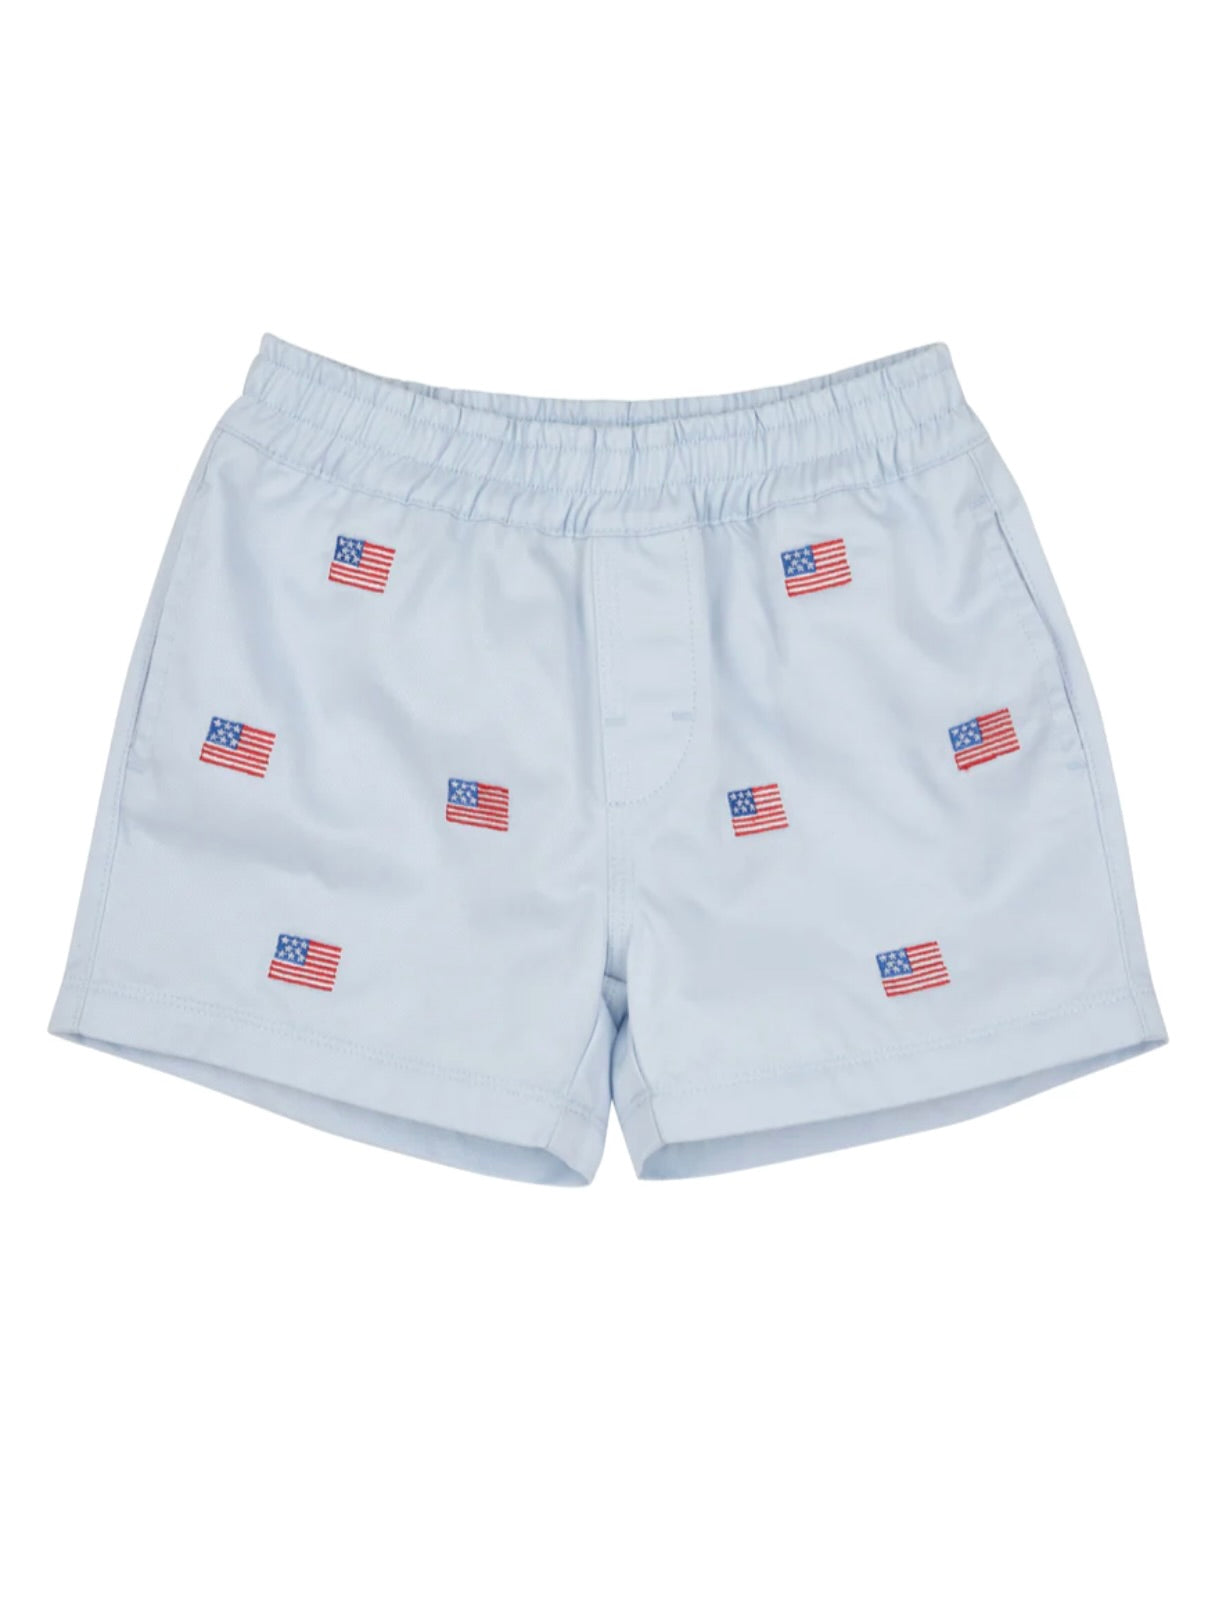 Critter Sheffield Shorts - American Flags